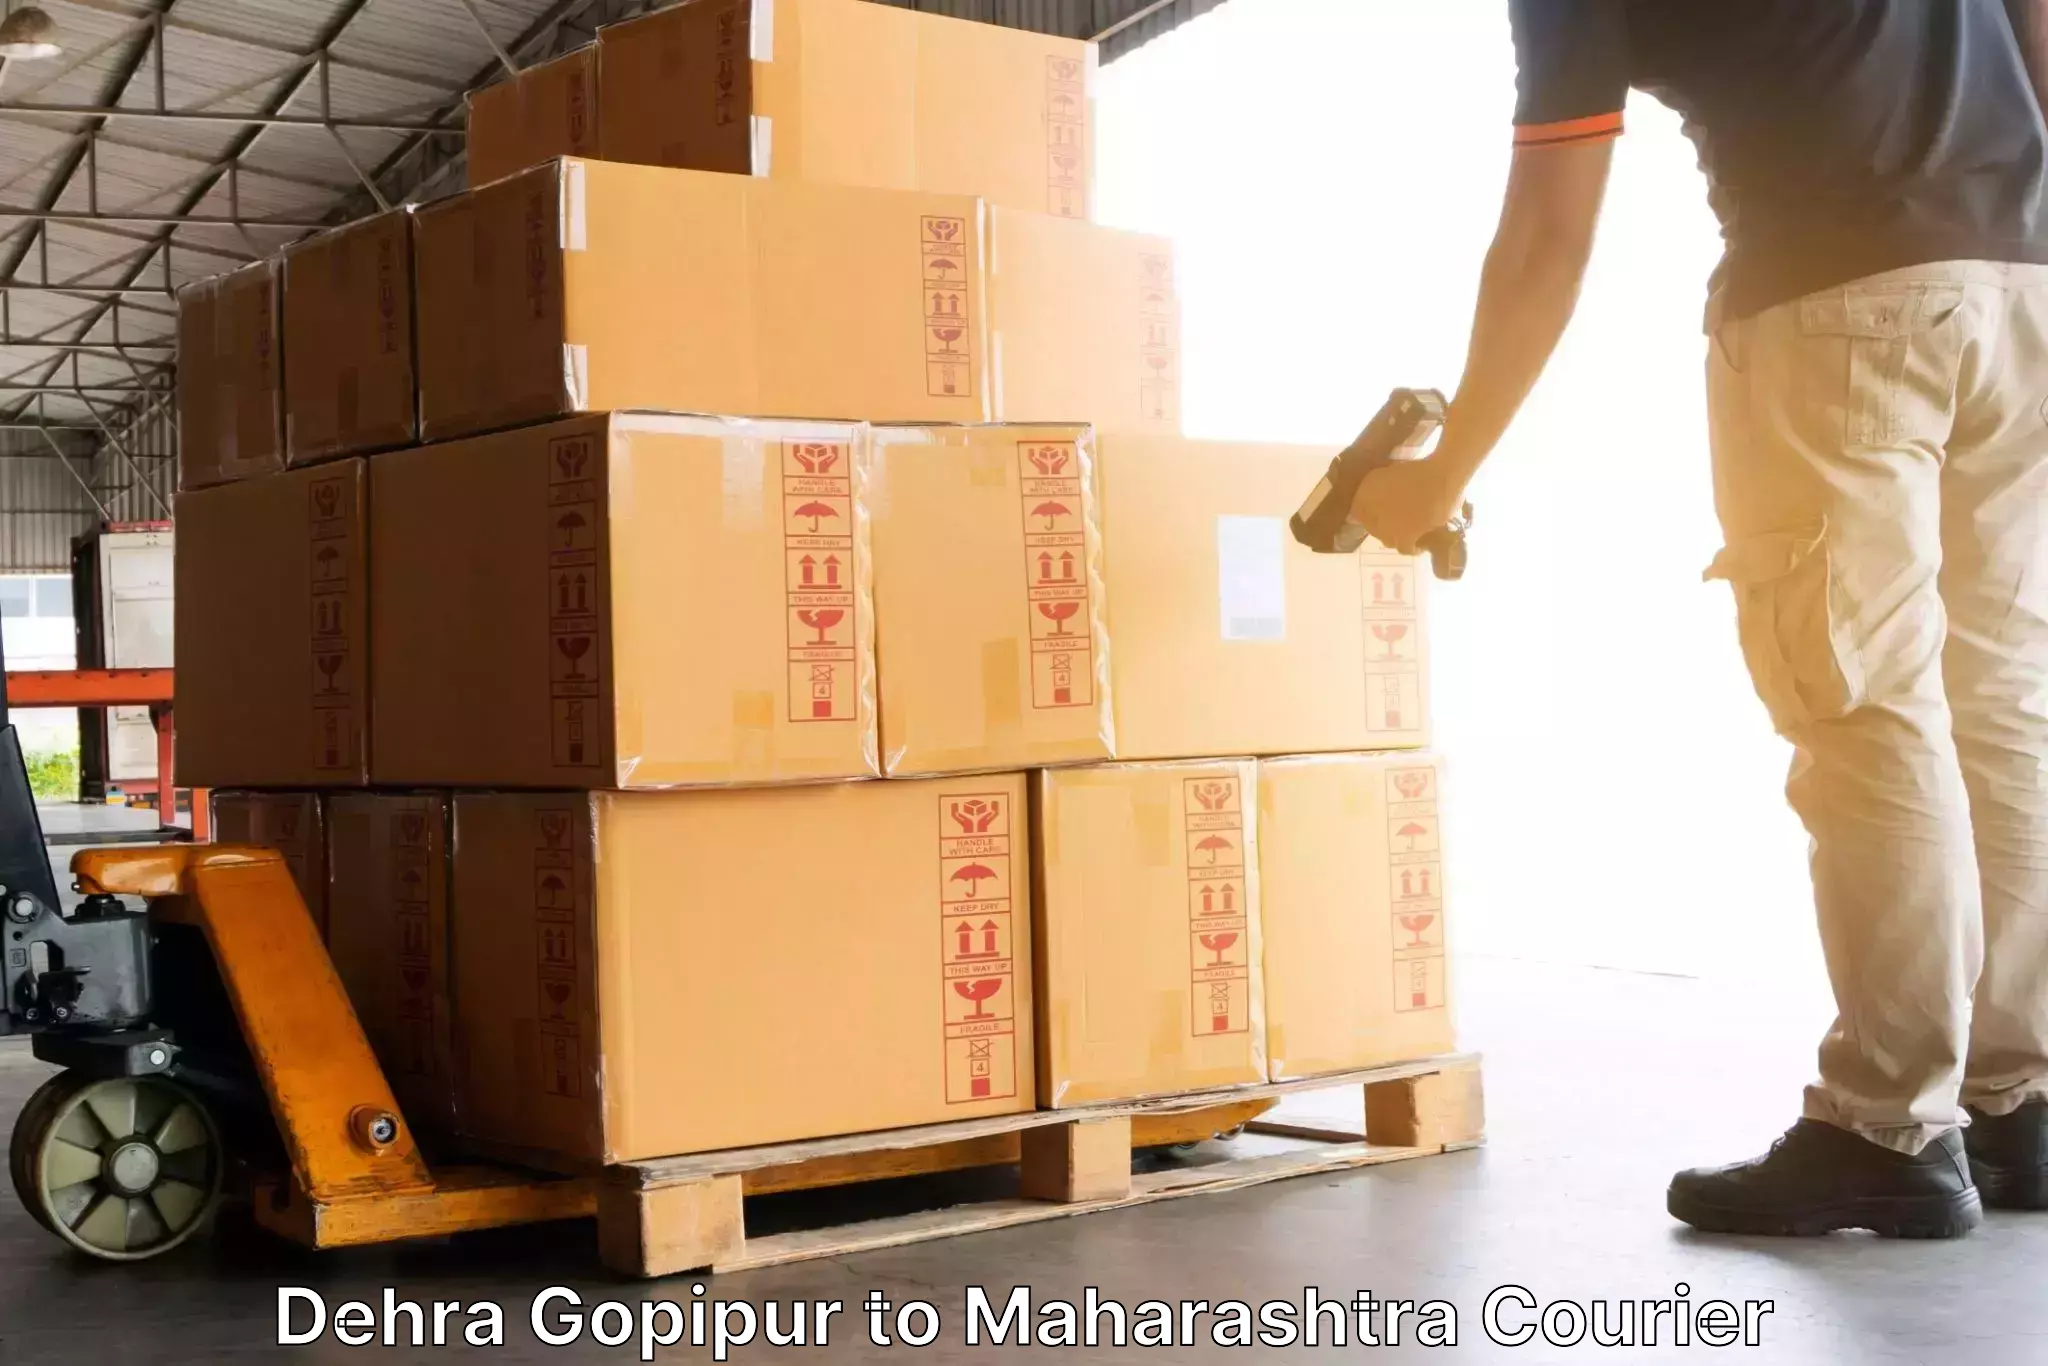 International parcel service Dehra Gopipur to Yeola